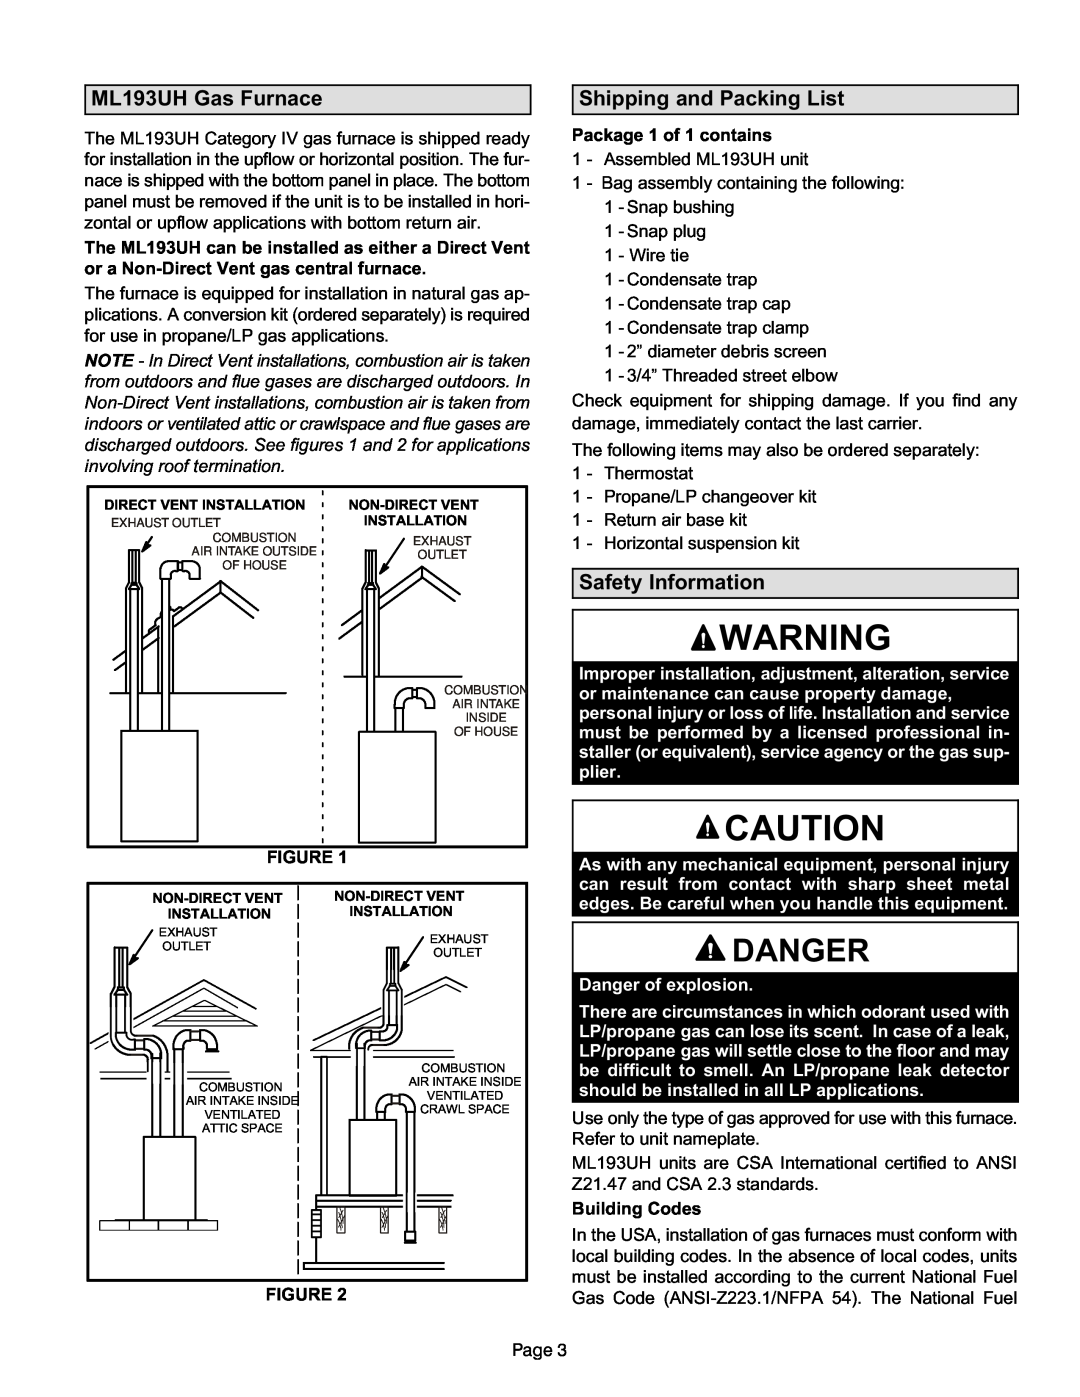 Lennox International Inc Lennox Merit Series Gas Furnace Upflow/Horizontal Air Discharge Danger, ML193UH Gas Furnace 